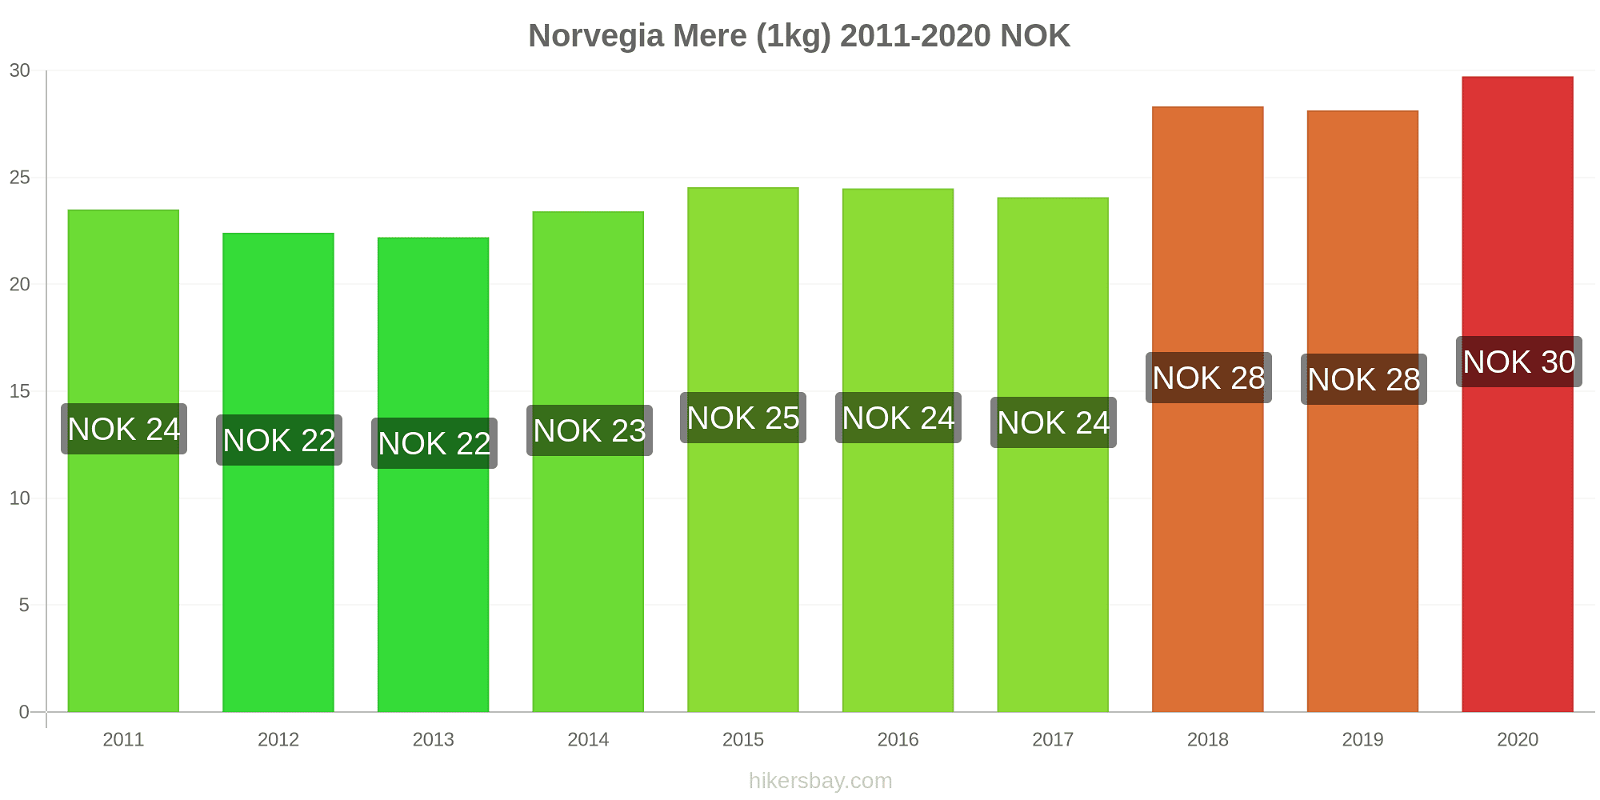 Norvegia modificări de preț Mere (1kg) hikersbay.com